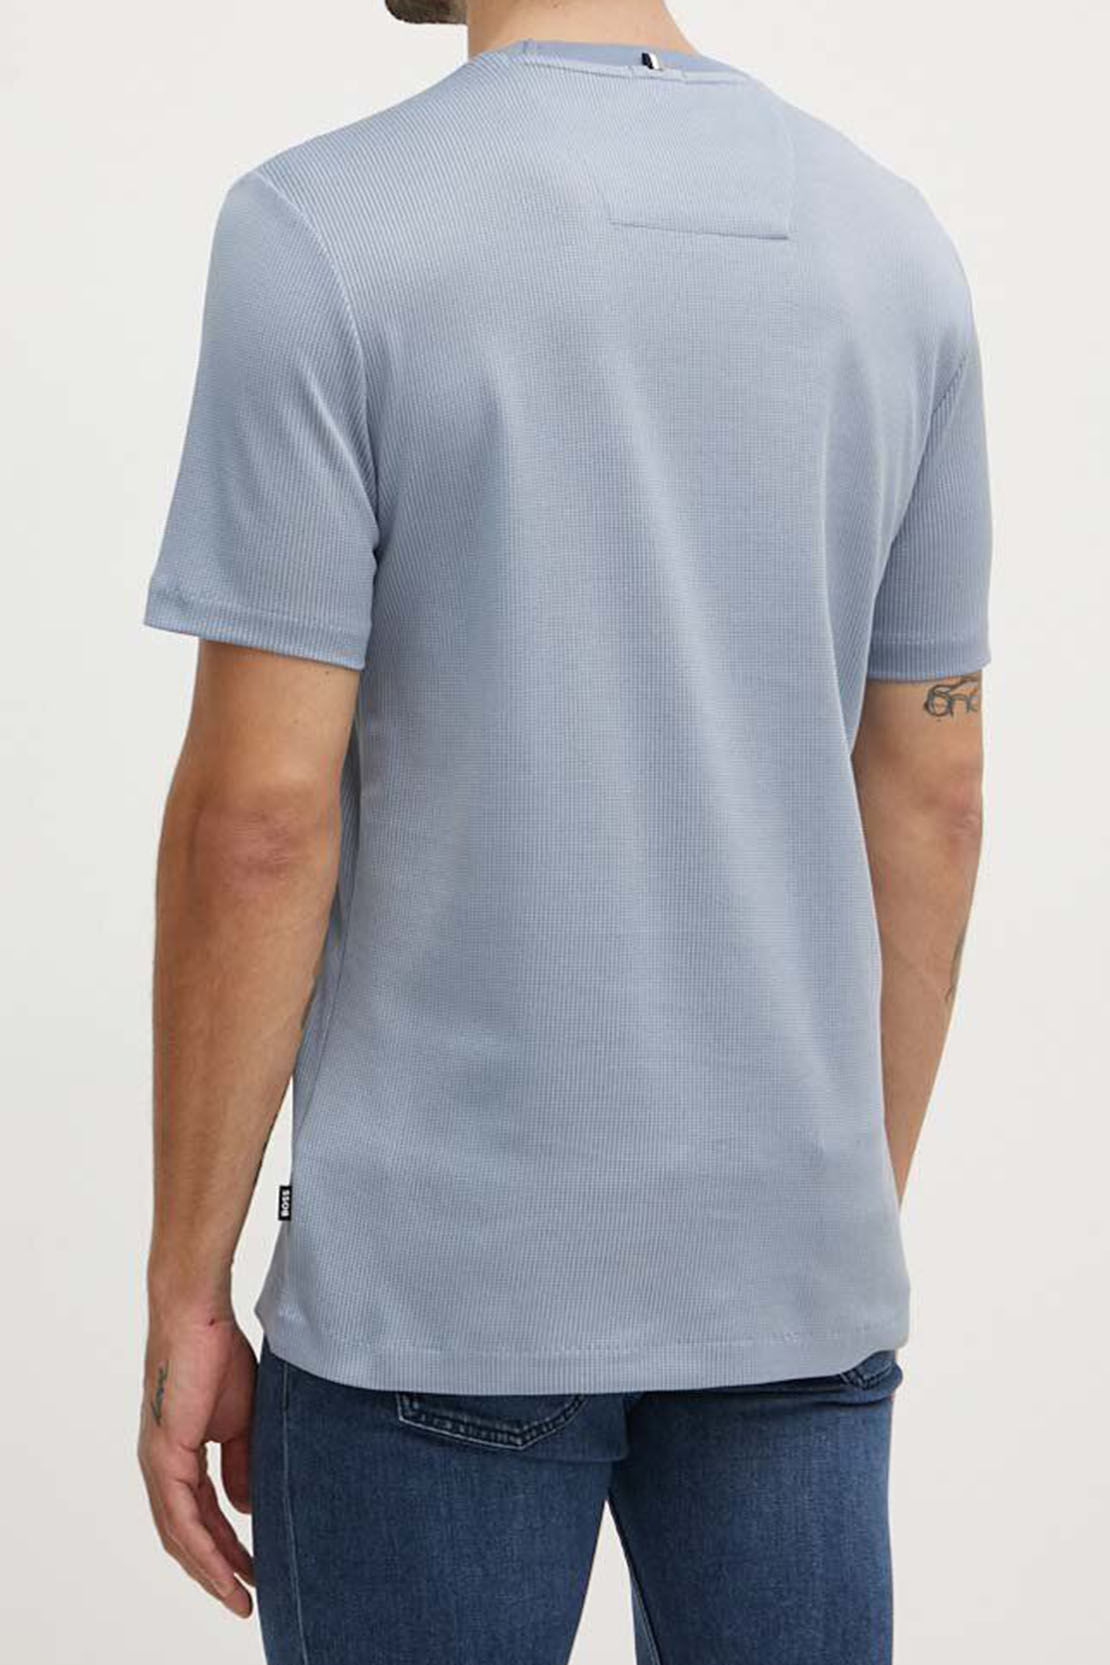 BOSS - H-TIBURT 431 - Open Blue Textured T-shirt in Mercerised Cotton 50518539 490